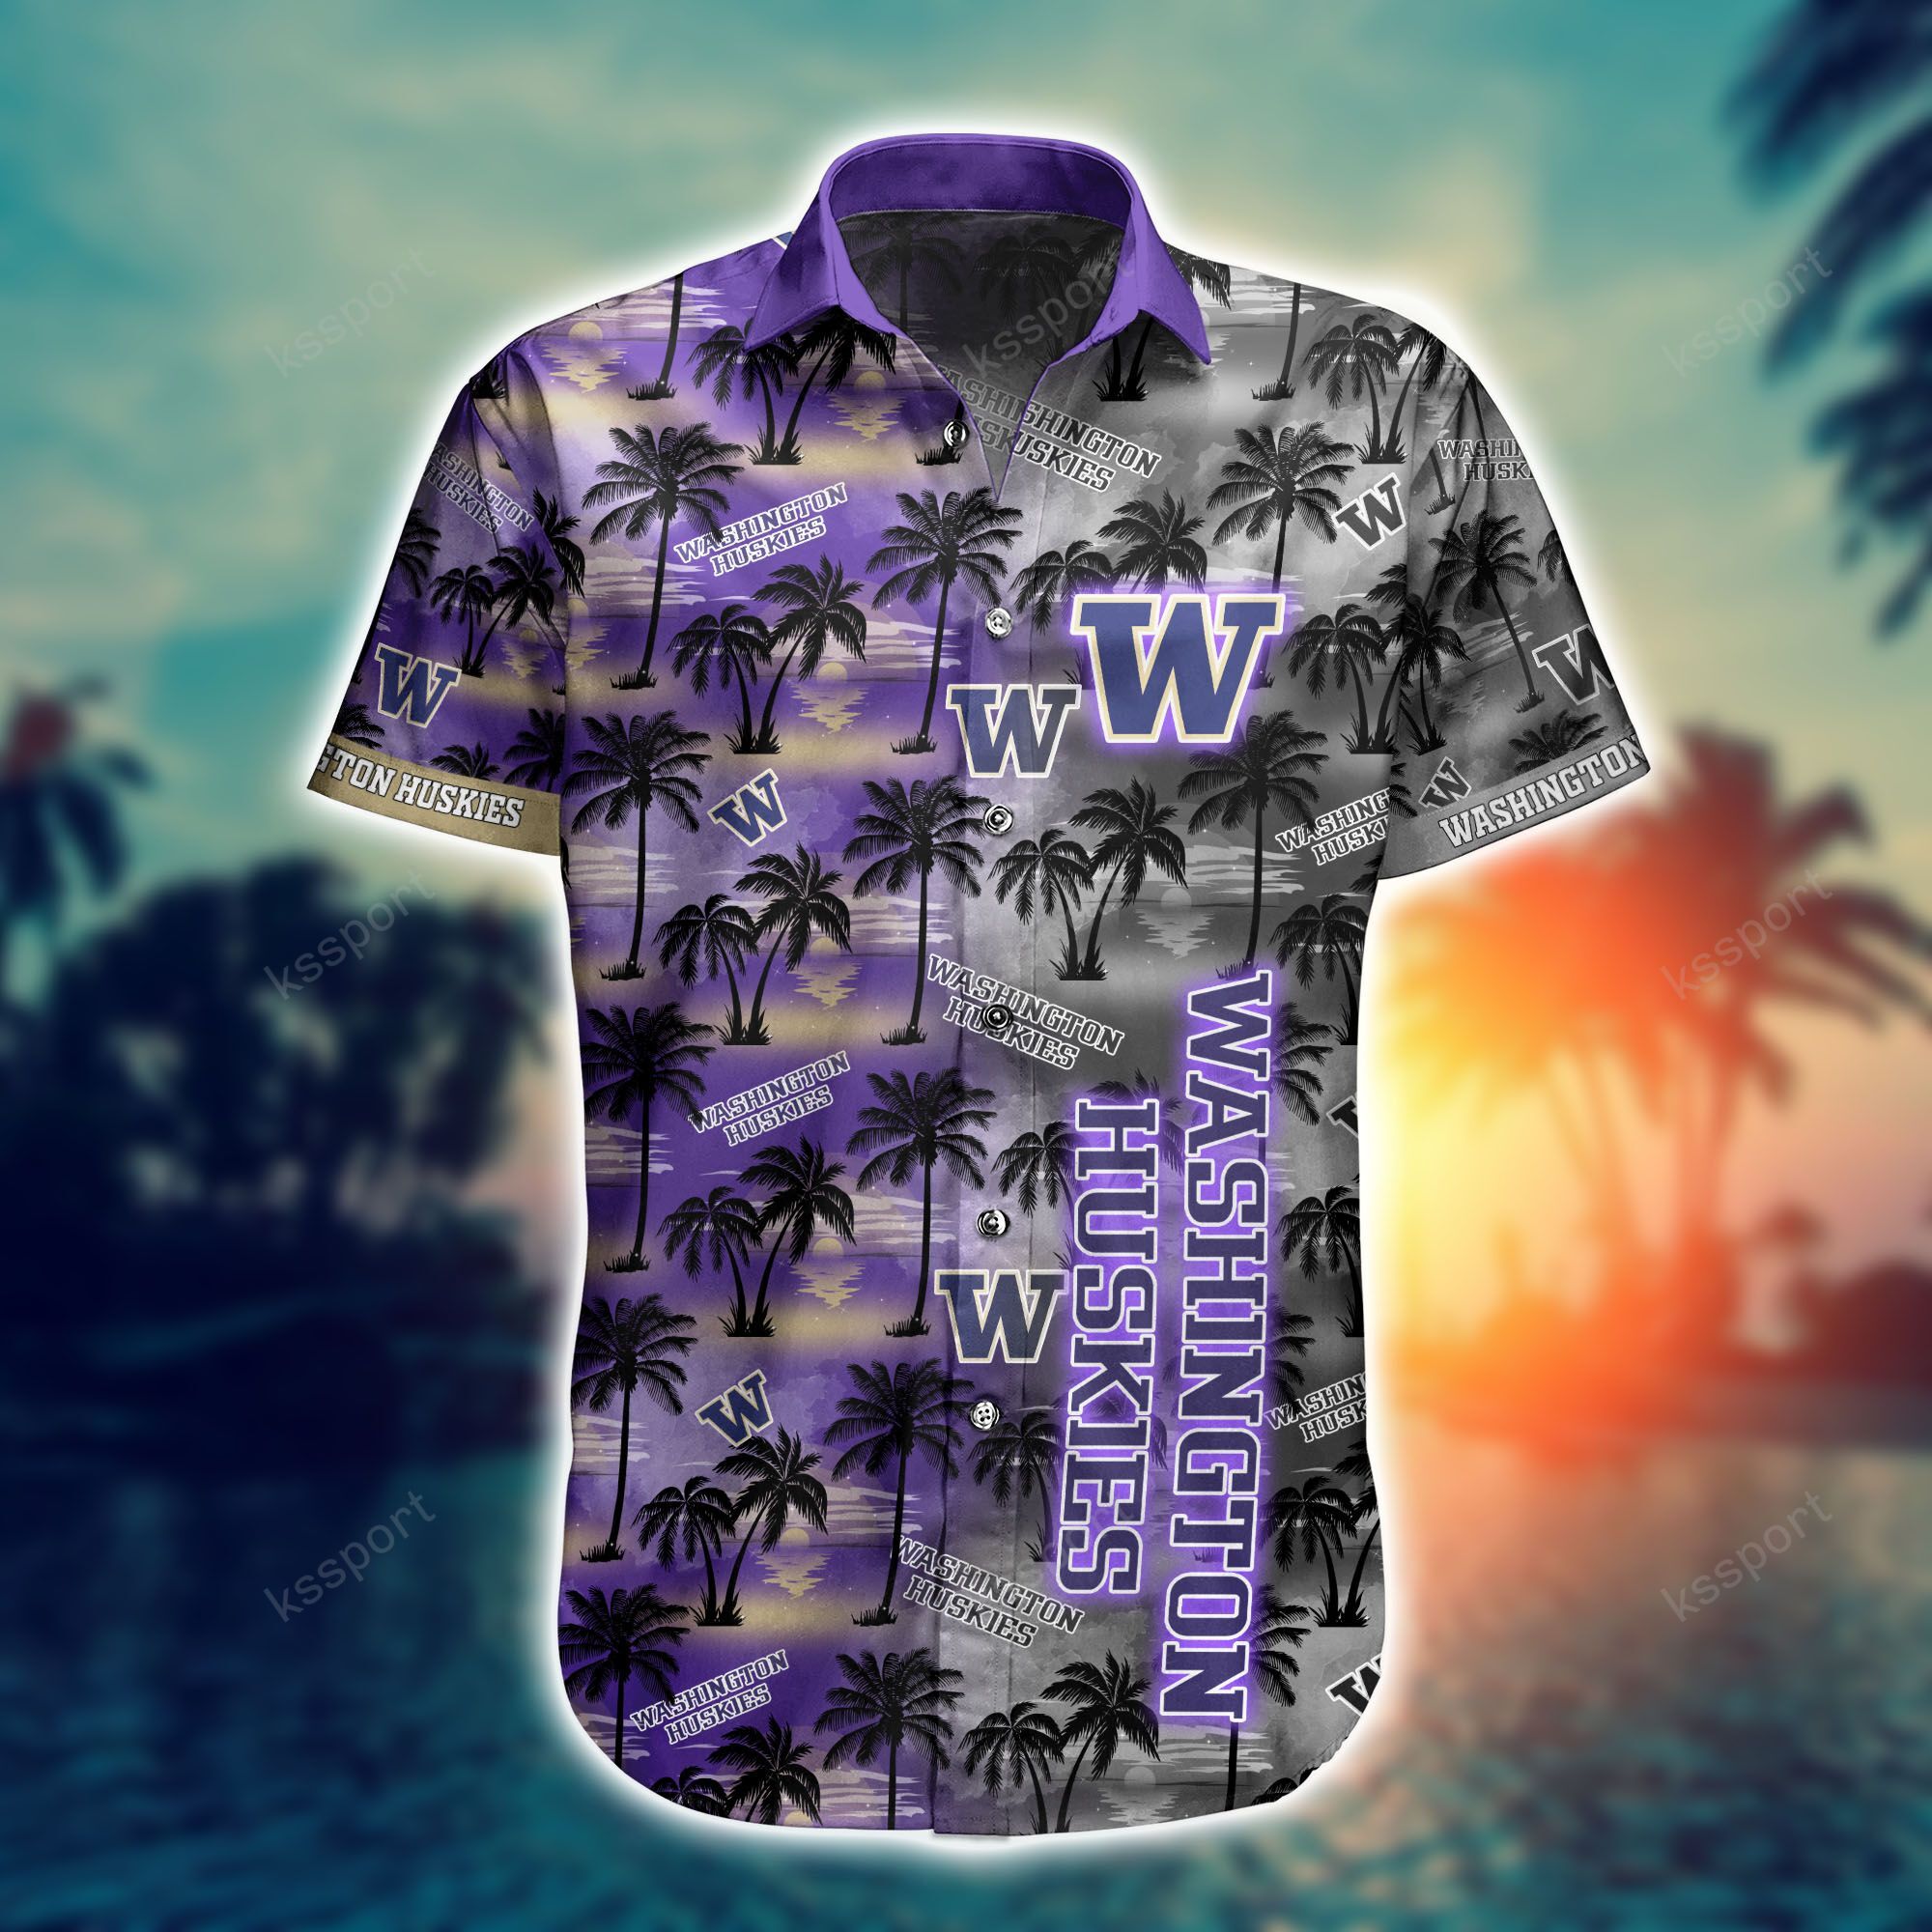 Hawaiian shirt and shorts is a great way to look stylish at a beach party 109